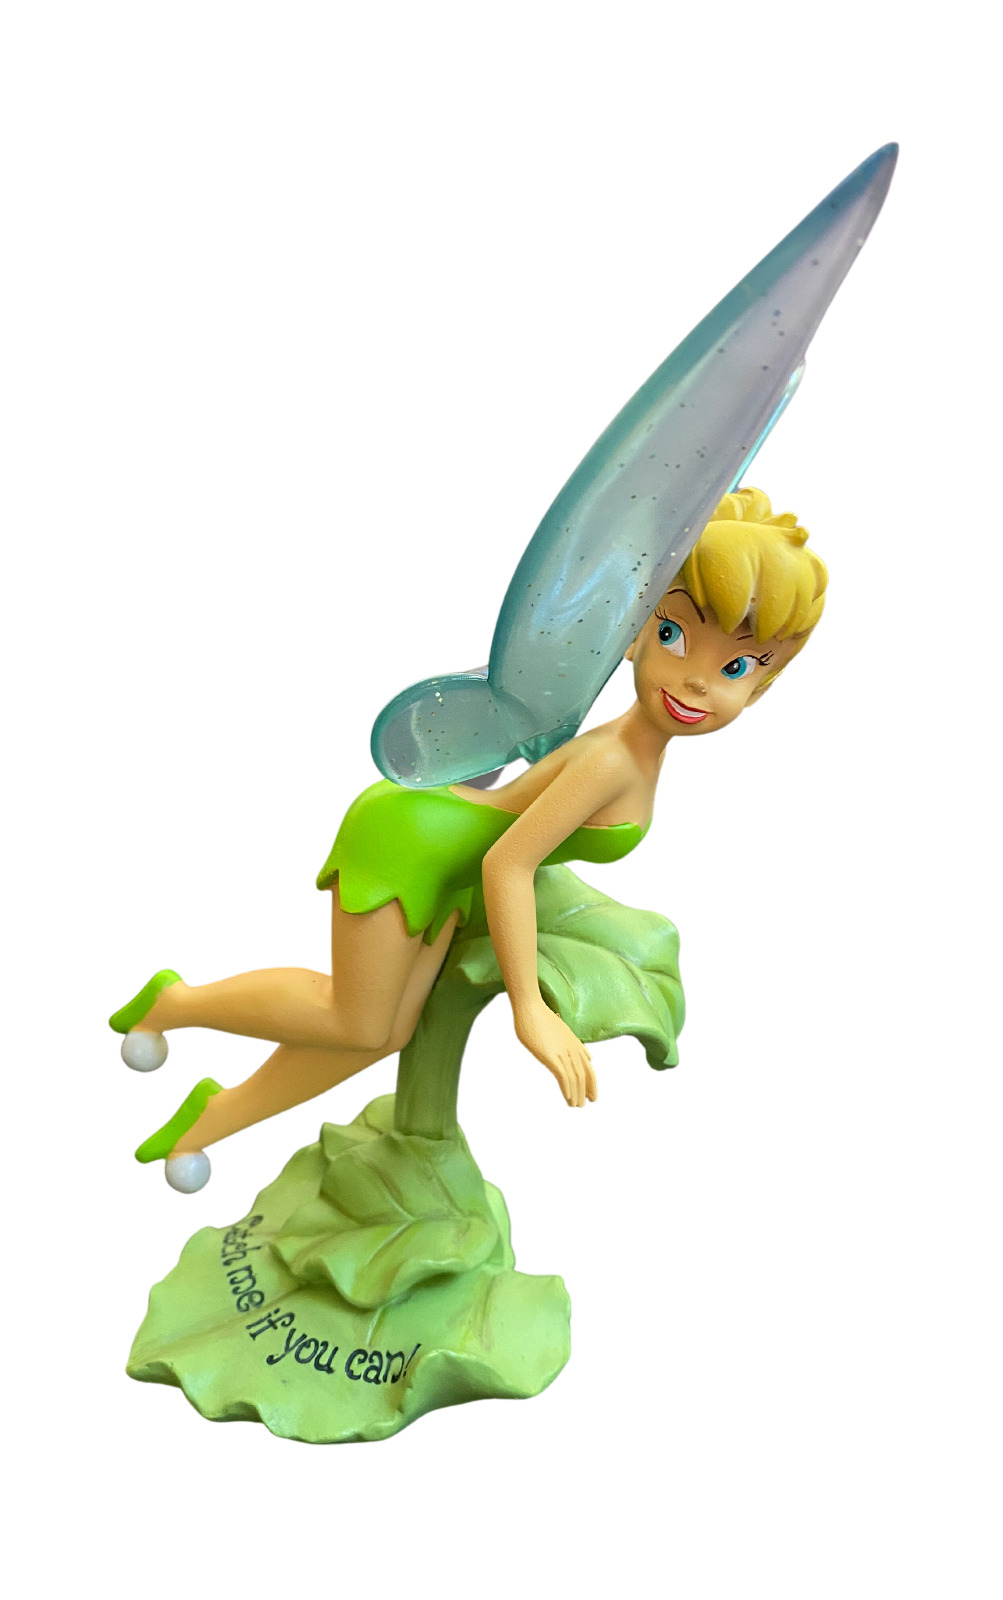 Bradford Exchange Tinkerbell Disney Figurine “Catch Me if You Can”  *Rare*